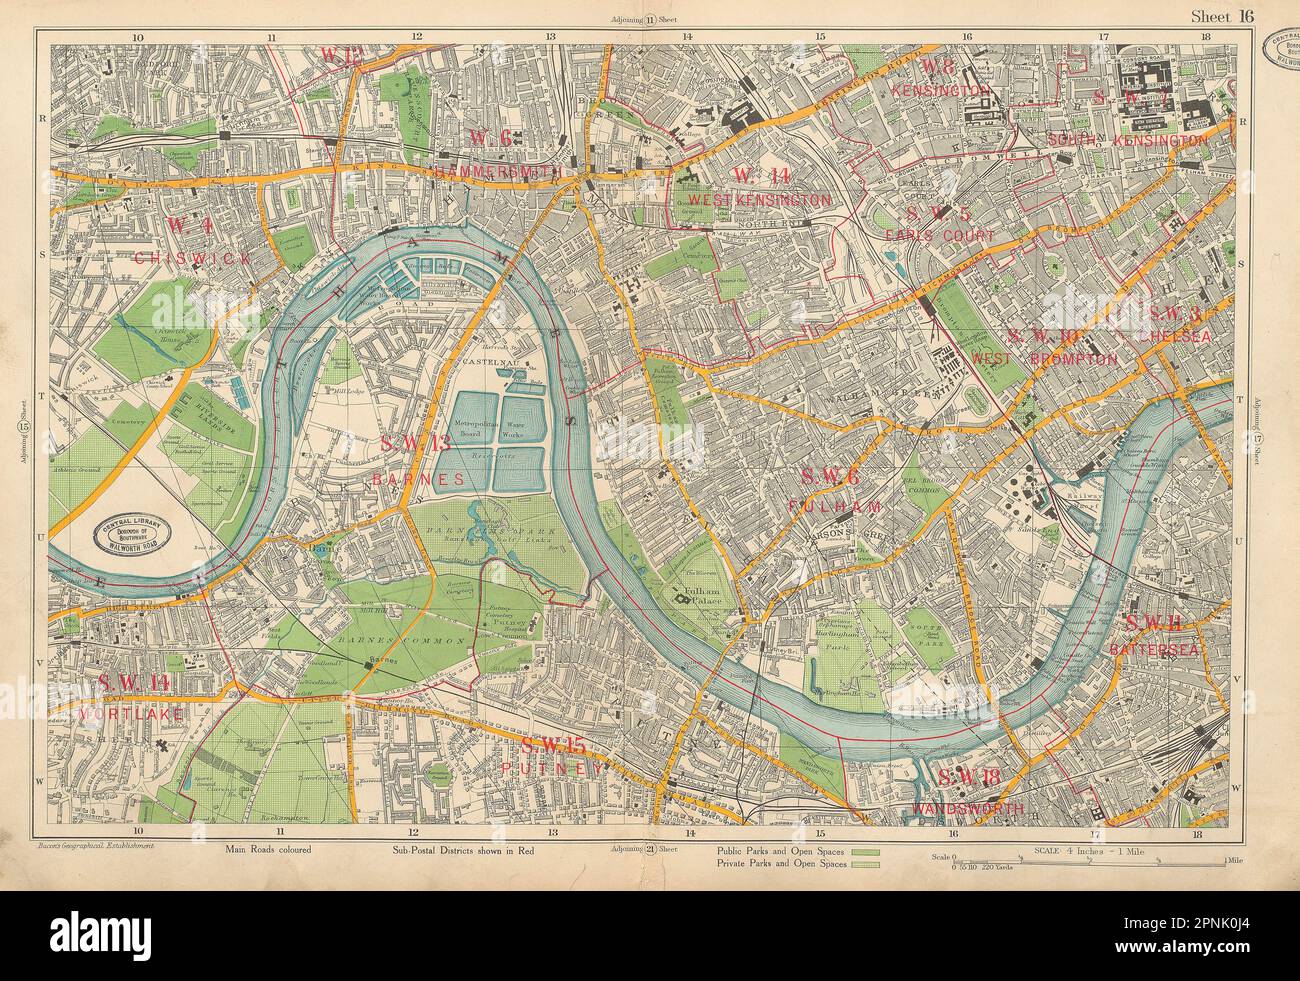 HAMMERSMITH FULHAM Chiswick Kensington Chelsea Putney Barnes. BACON 1934 map Stock Photo